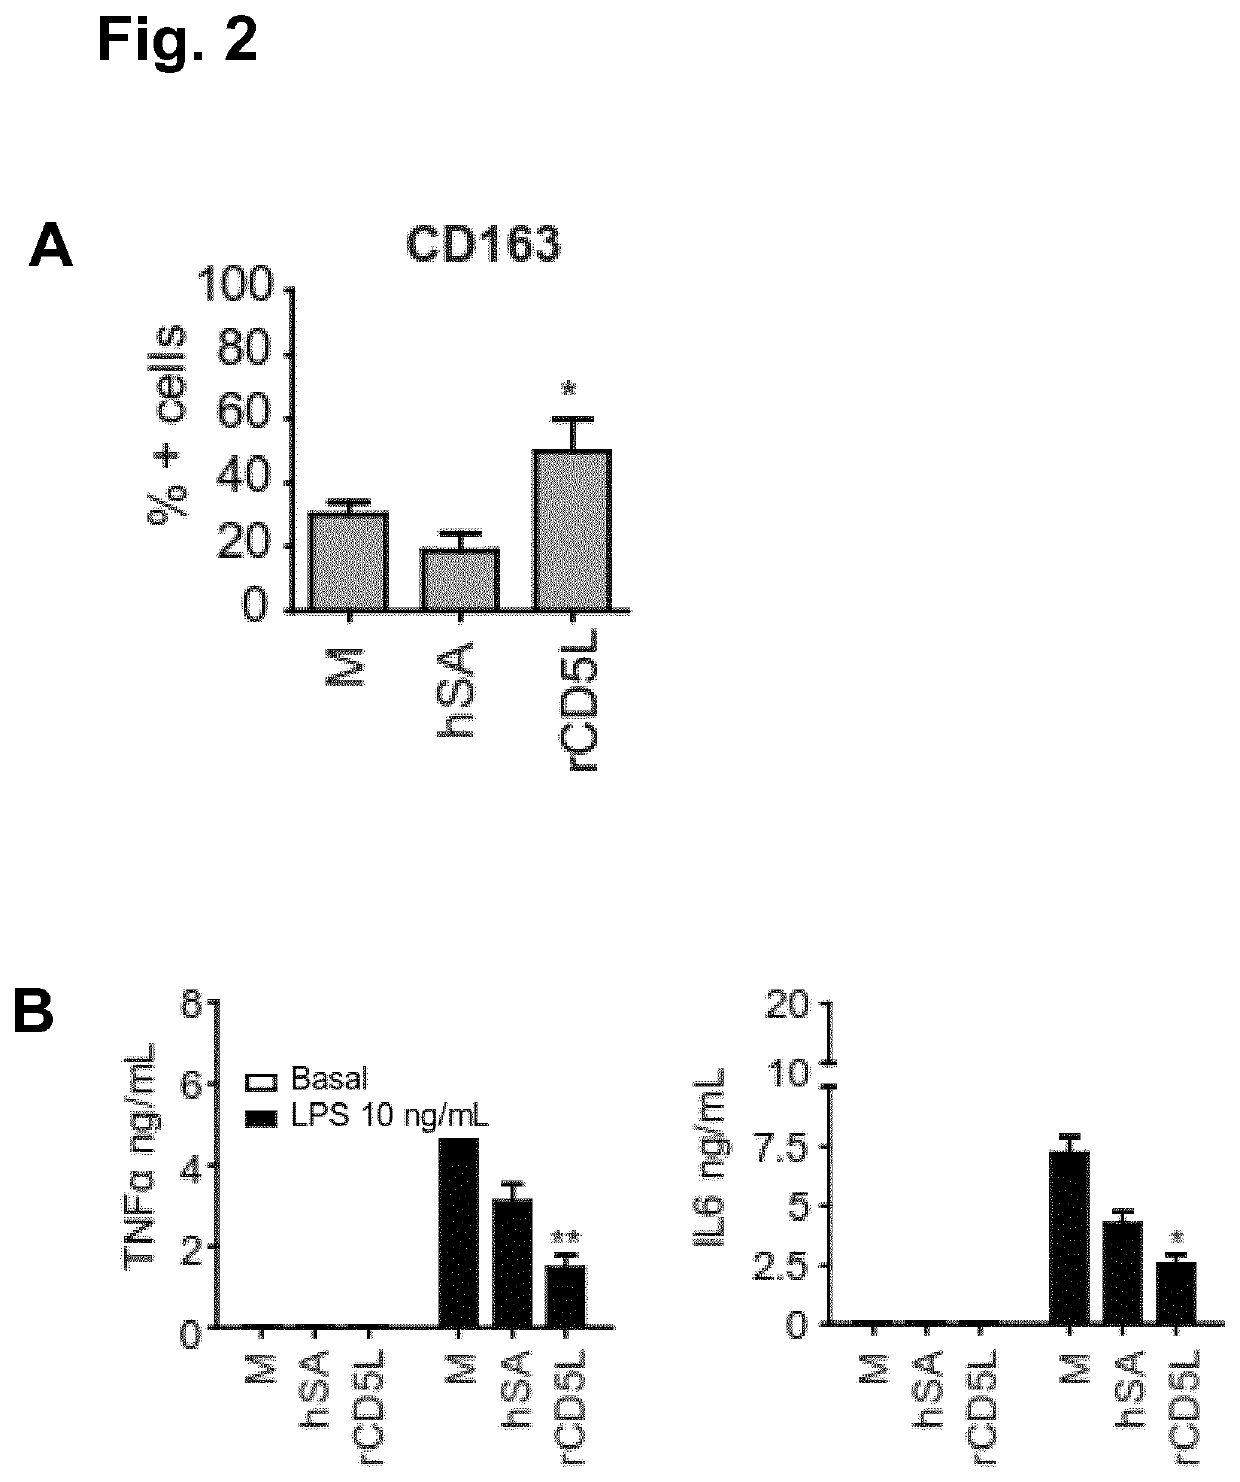 Anti-CD5L antibody and uses thereof